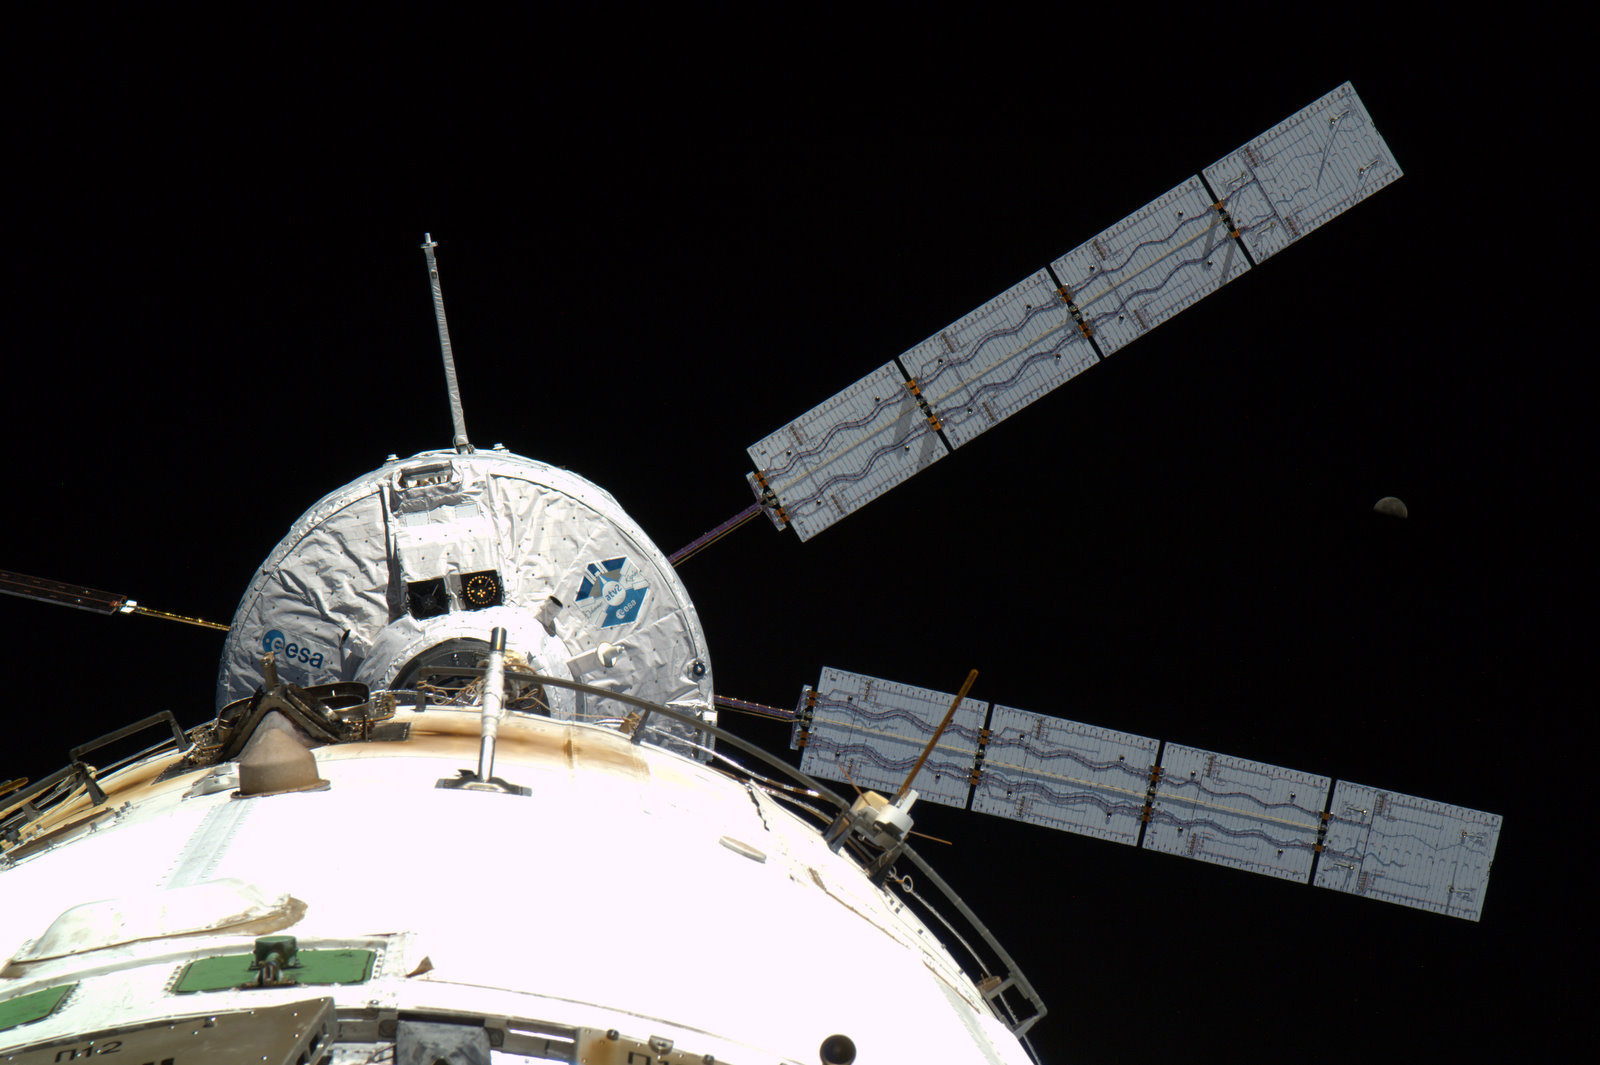 Johannes+Kepler+docking+with+the+Space+Station+on+24+February.jpg